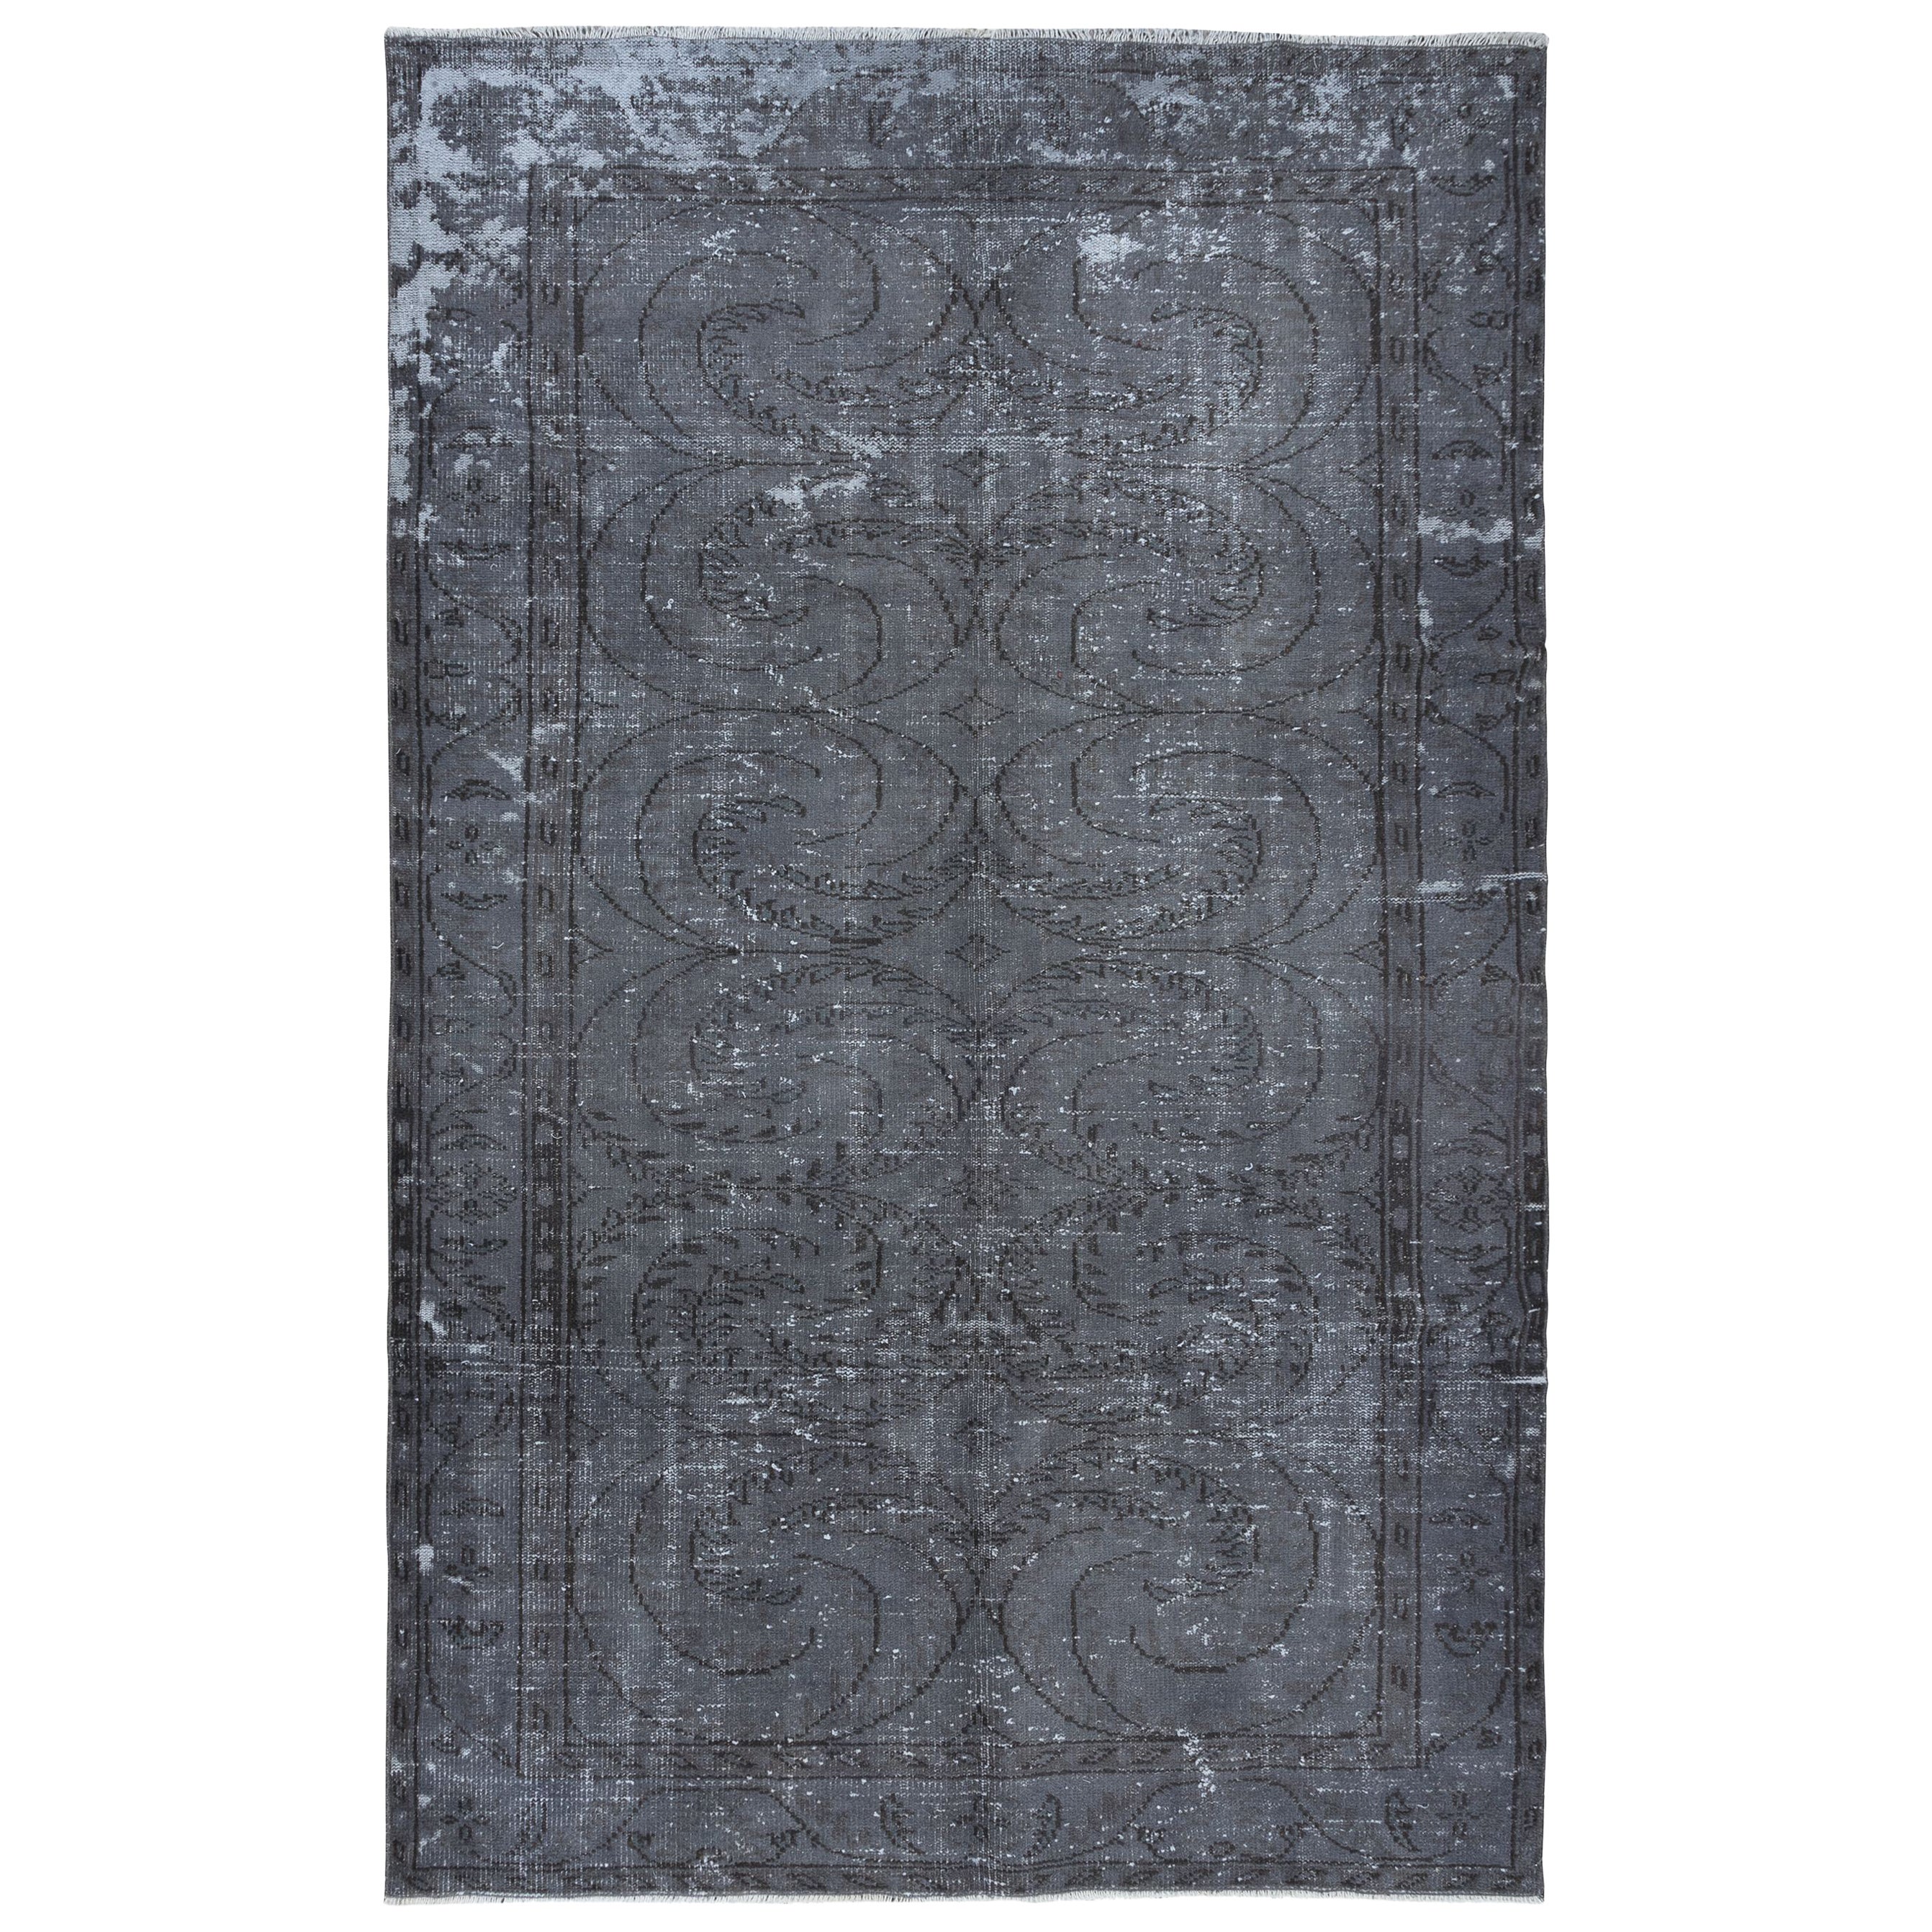 6.5x10 Ft Gray Handmade Shabby Chic Rug, Low Pile Carpet from Isparta, Turkey